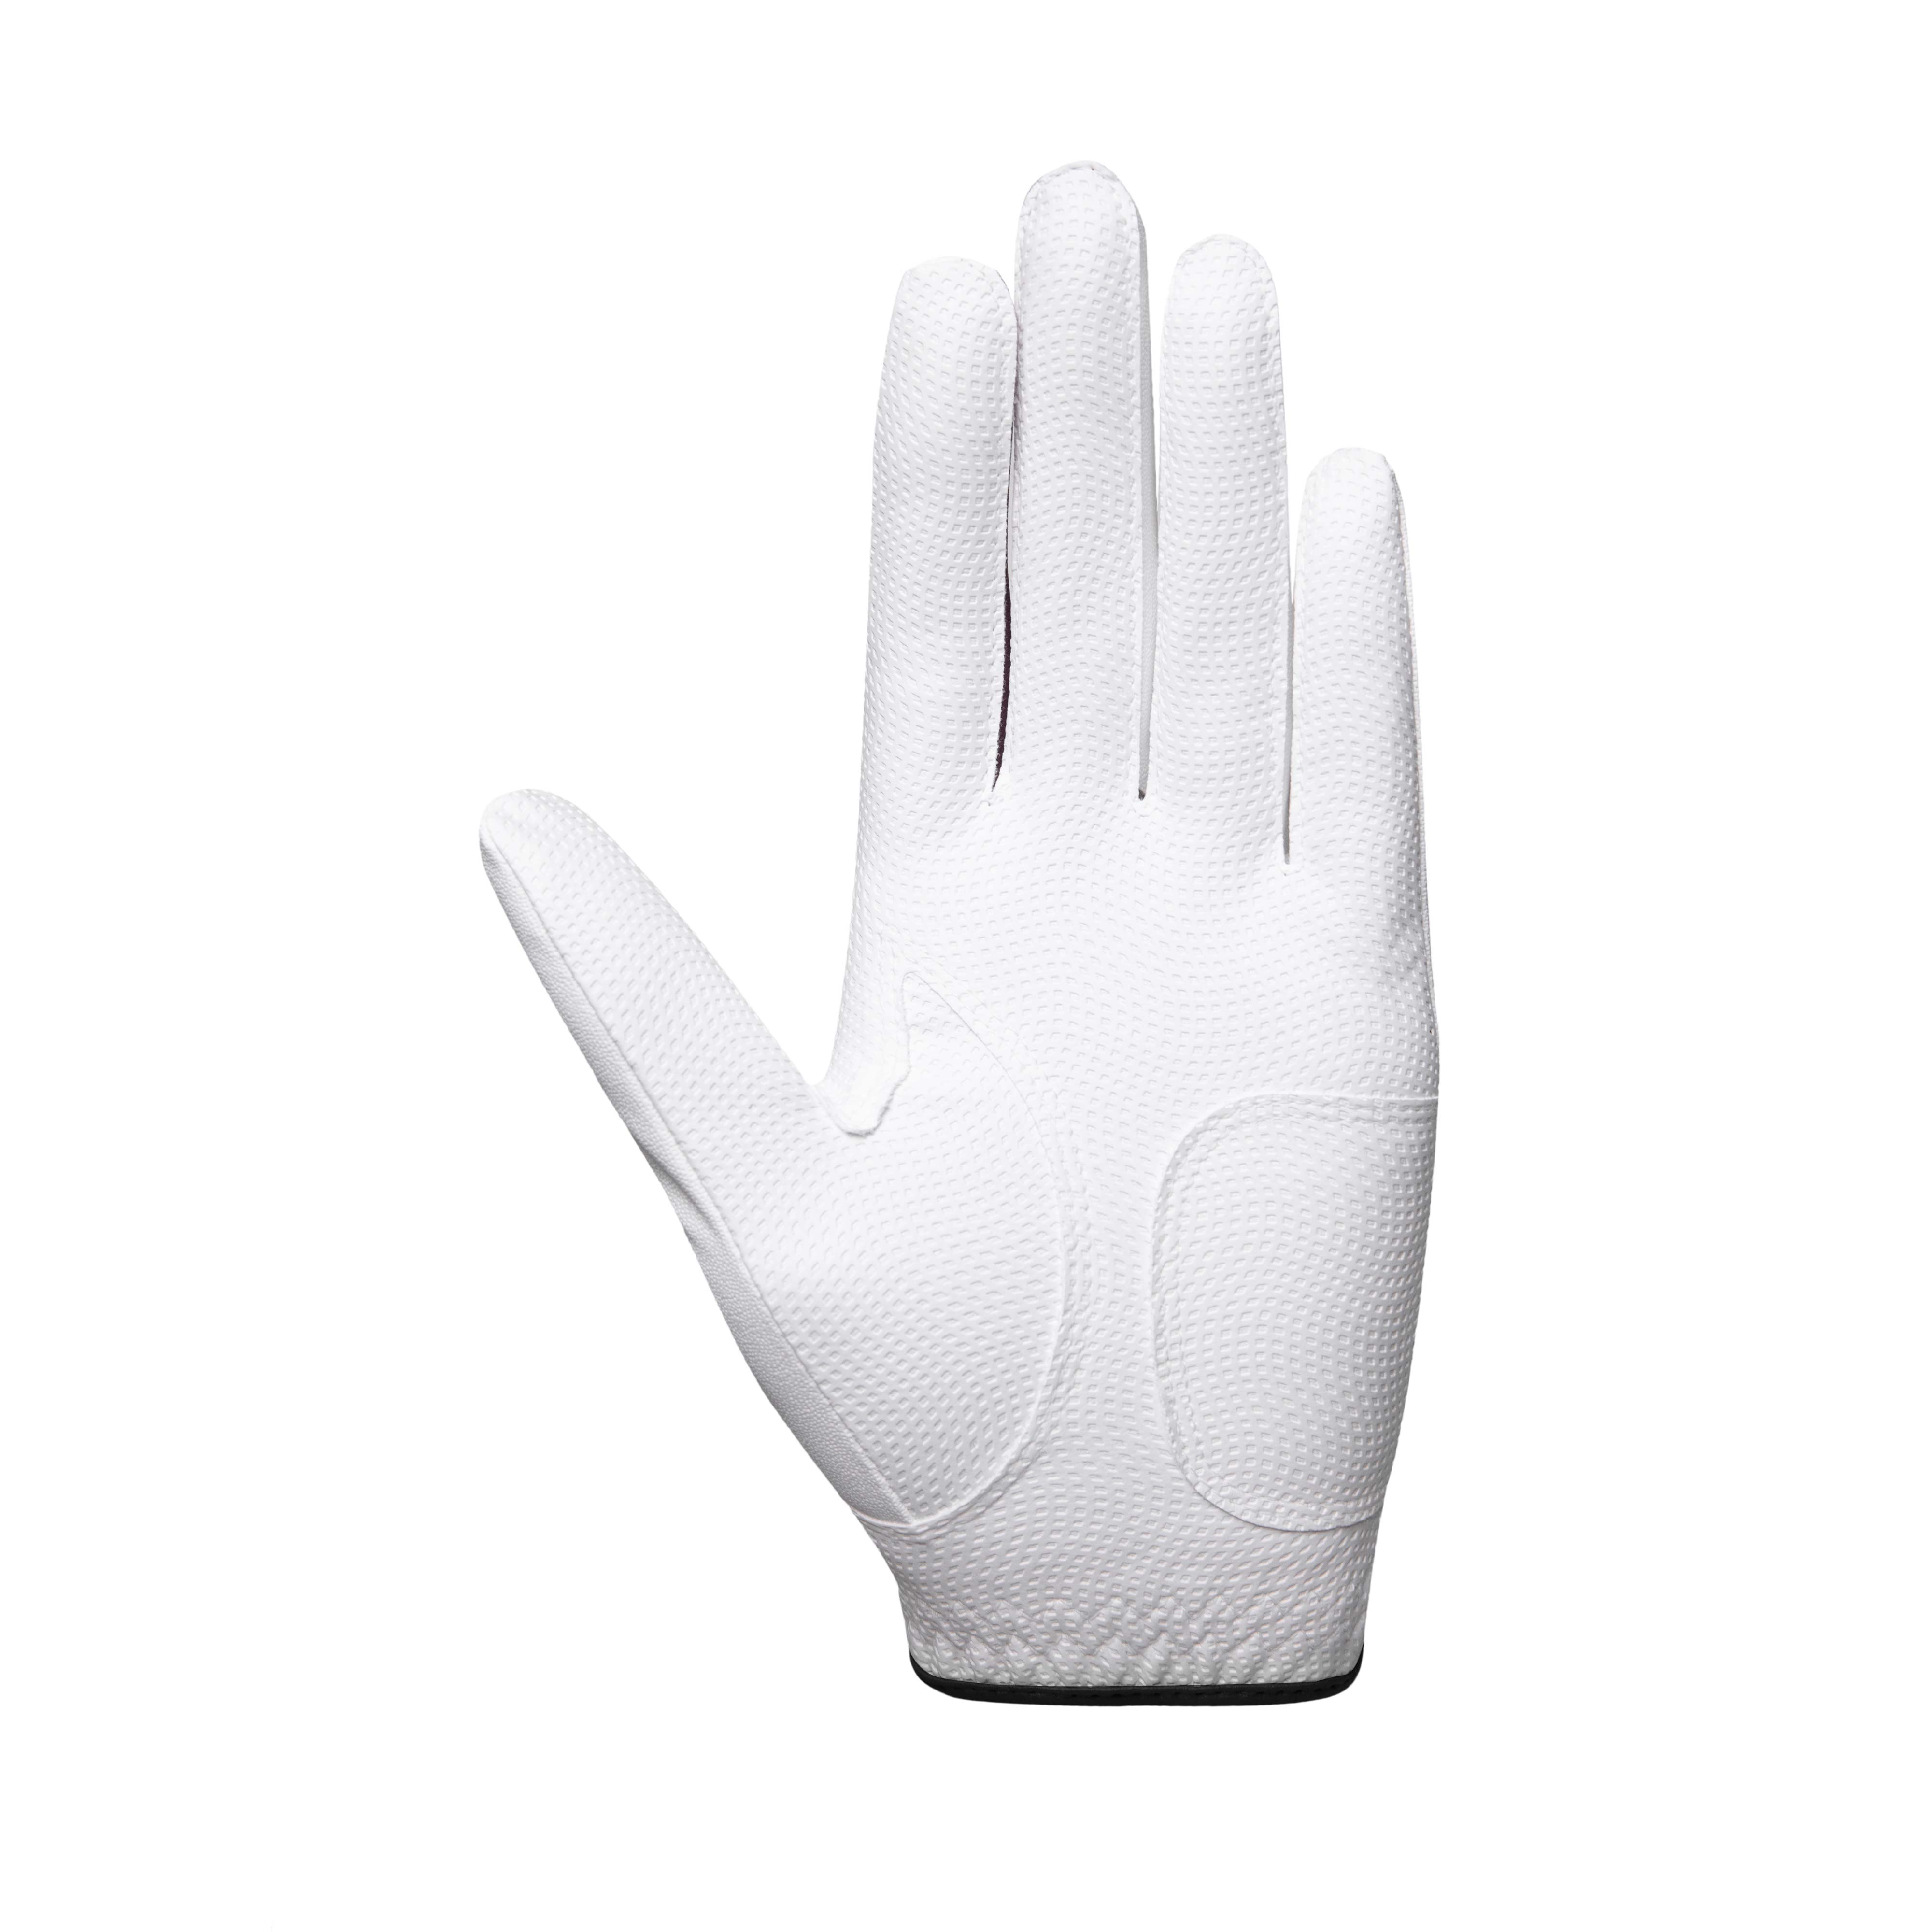 Black Vanguard Gloves